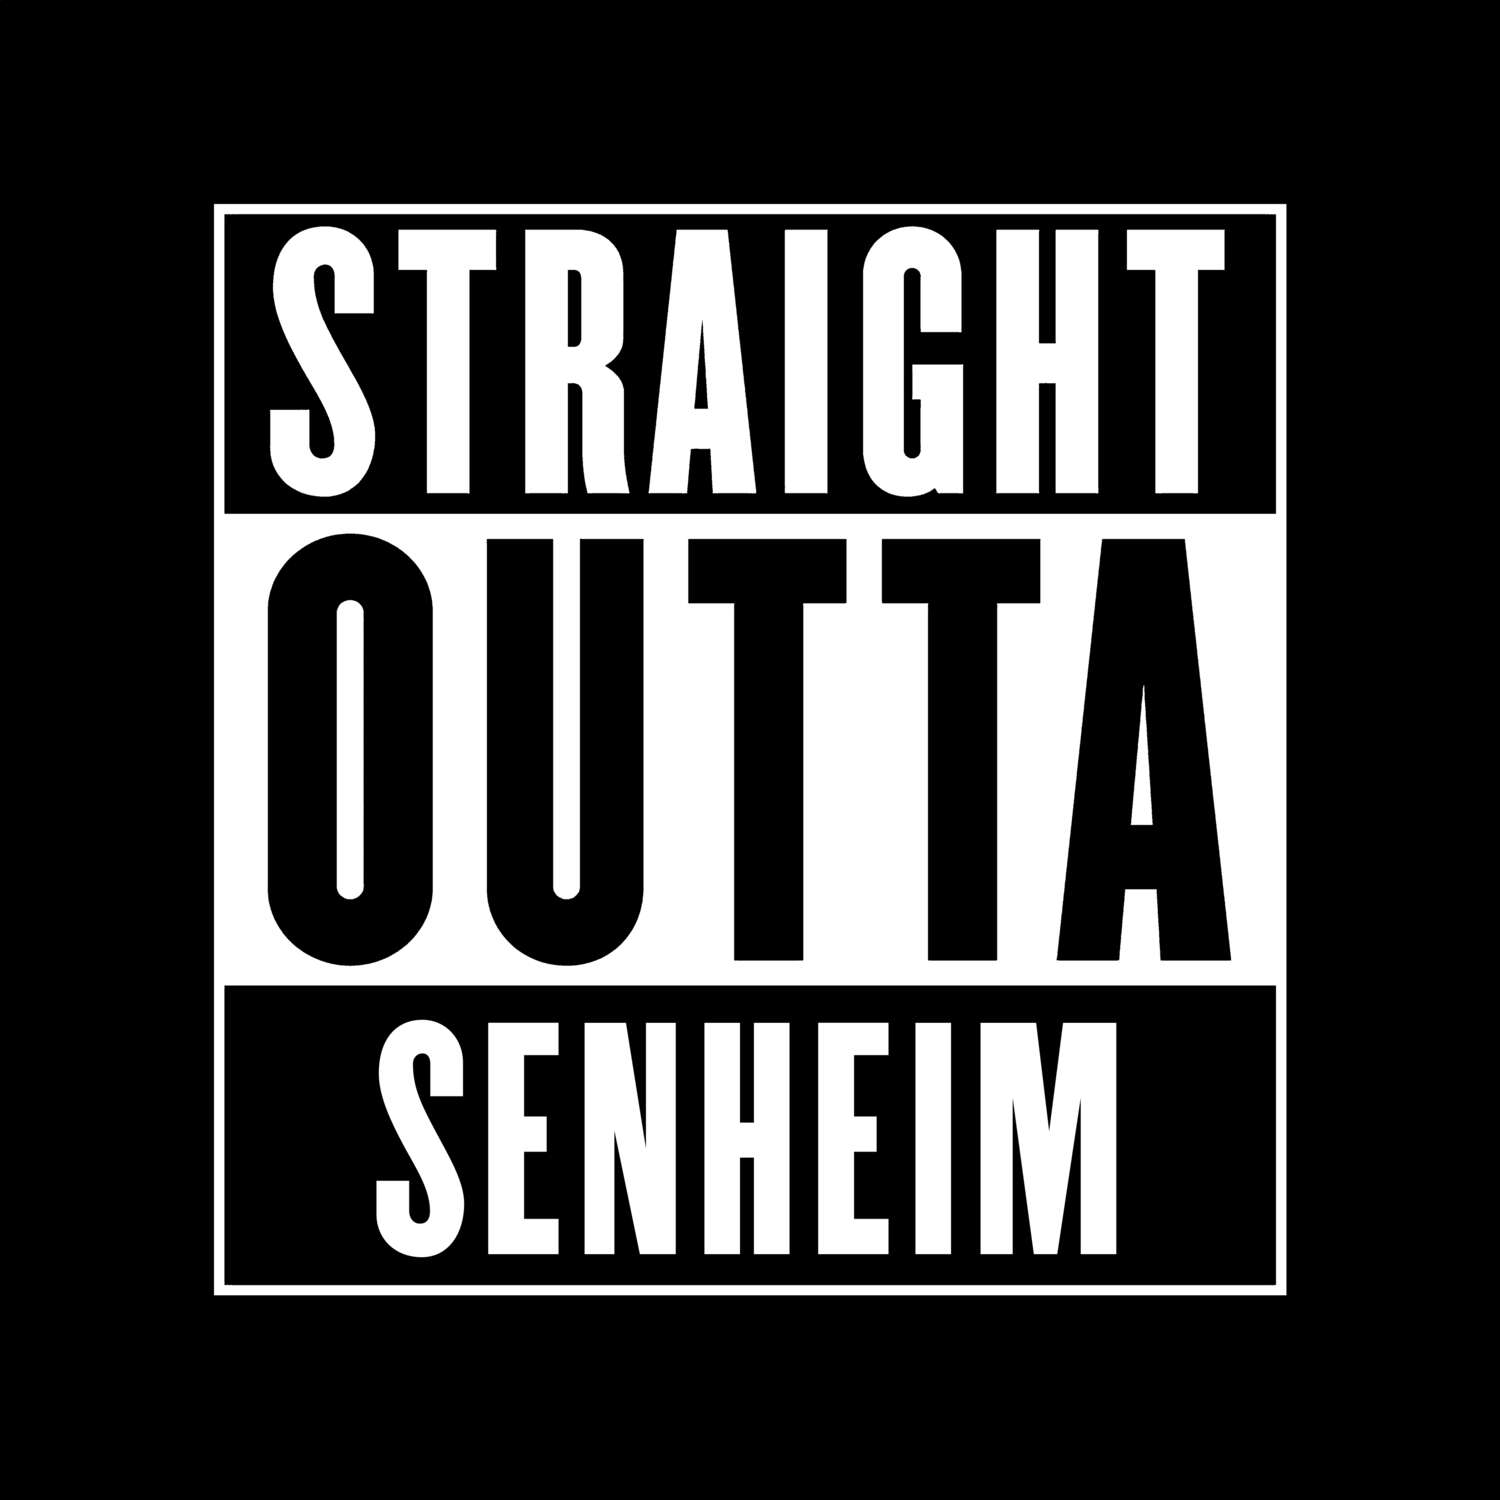 Senheim T-Shirt »Straight Outta«